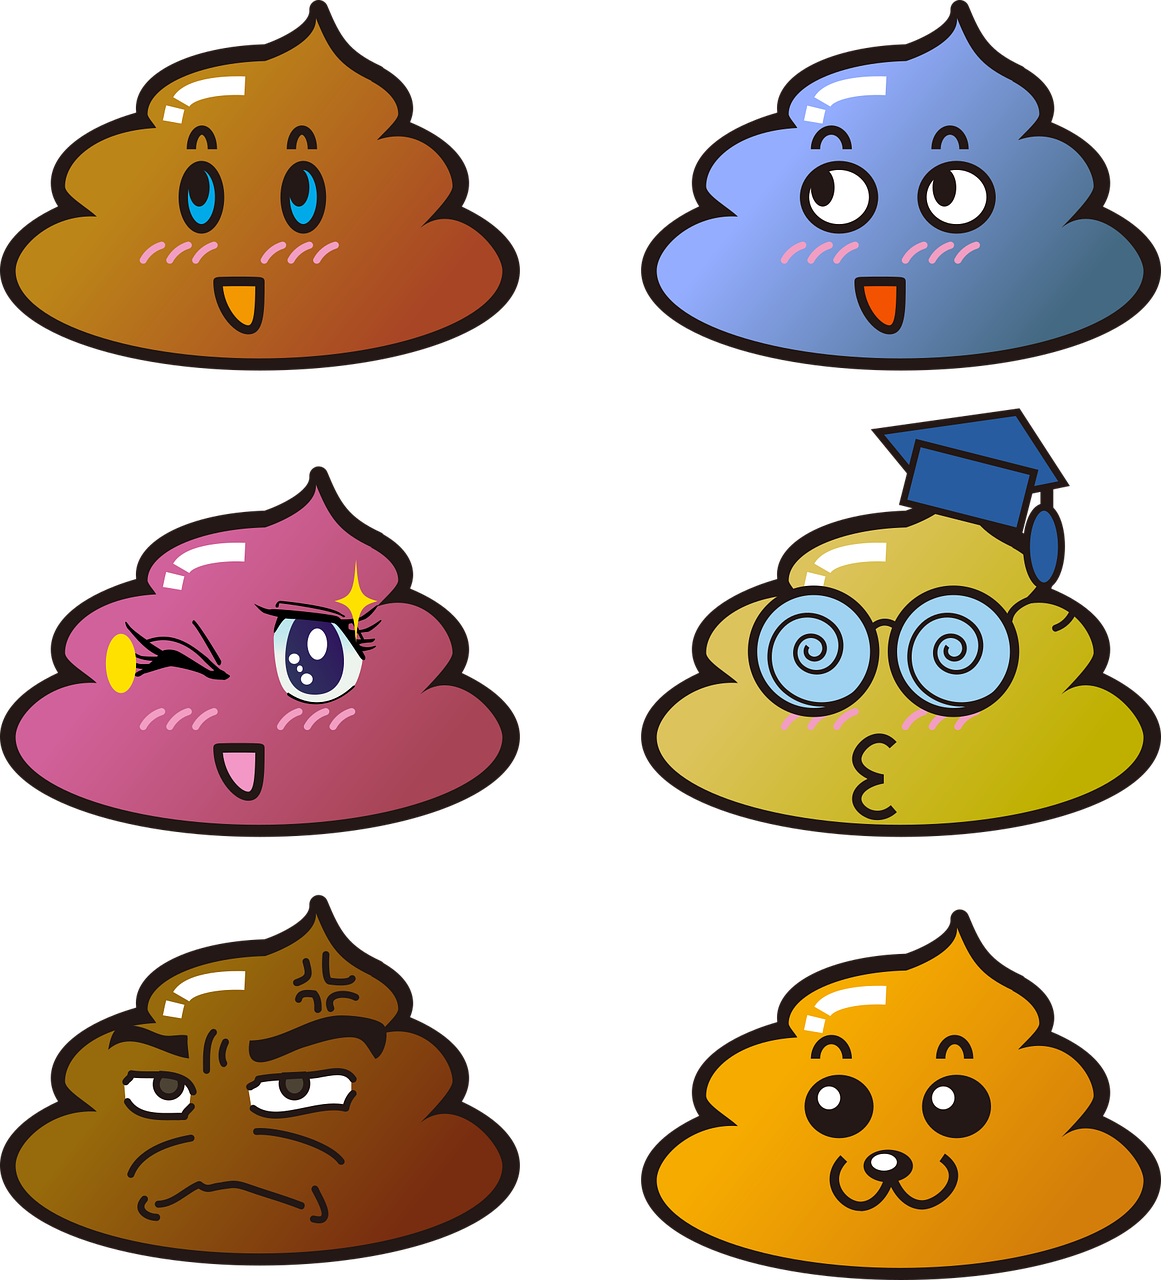 Poop Shit Poo Crap Funny Pile  - nnaakk / Pixabay